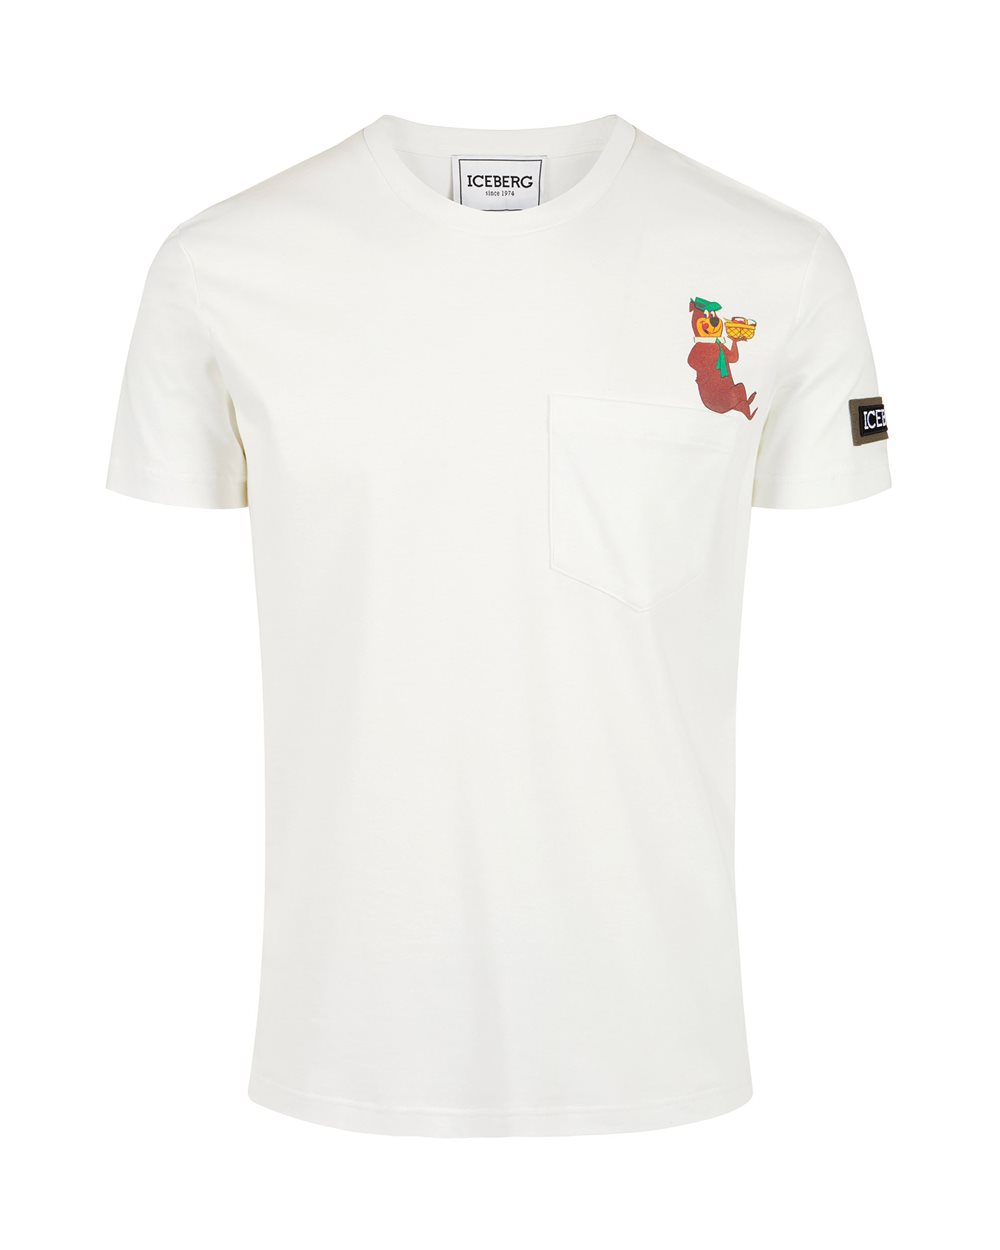 T-shirt in cotone sostenibile con Yogi Bear - PREVIEW | Iceberg - Official Website